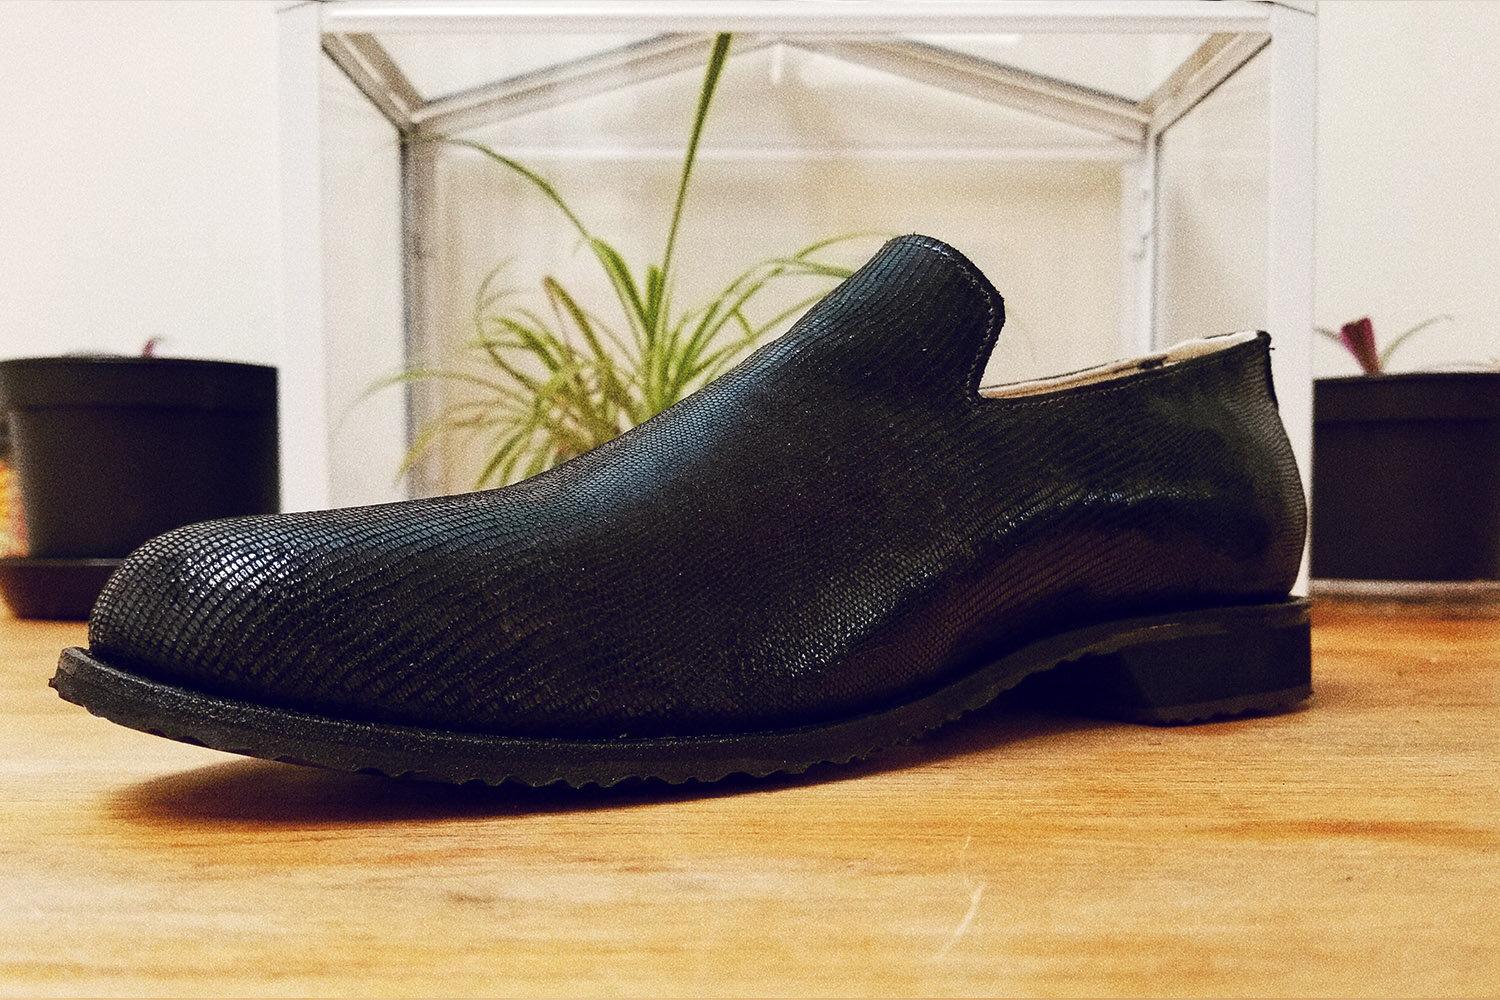 Fishscale leather slipper.